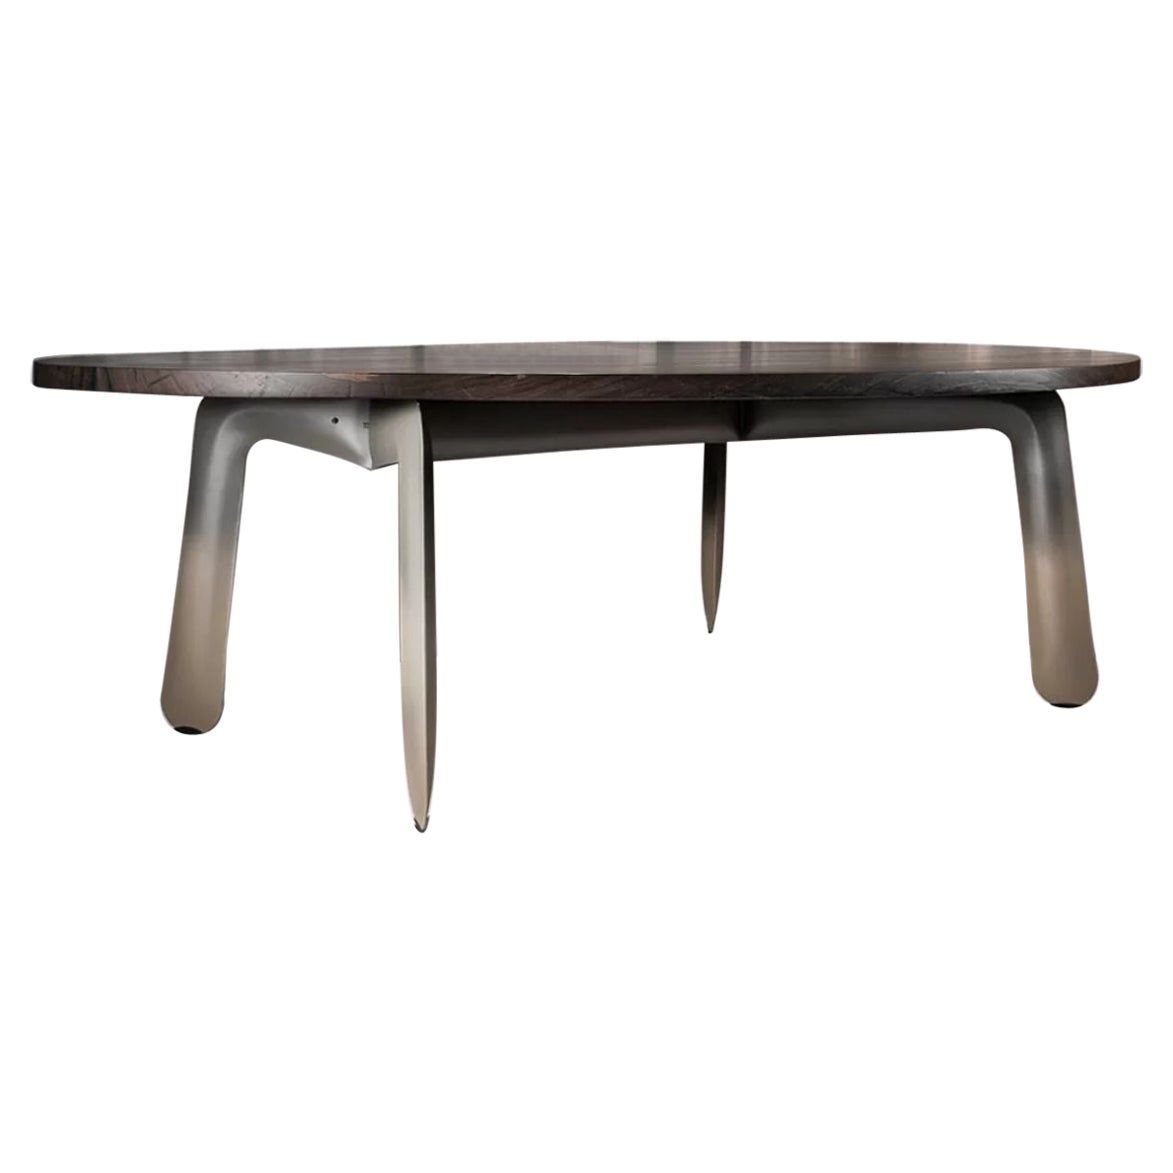 Chippensteel Table by Zieta For Sale